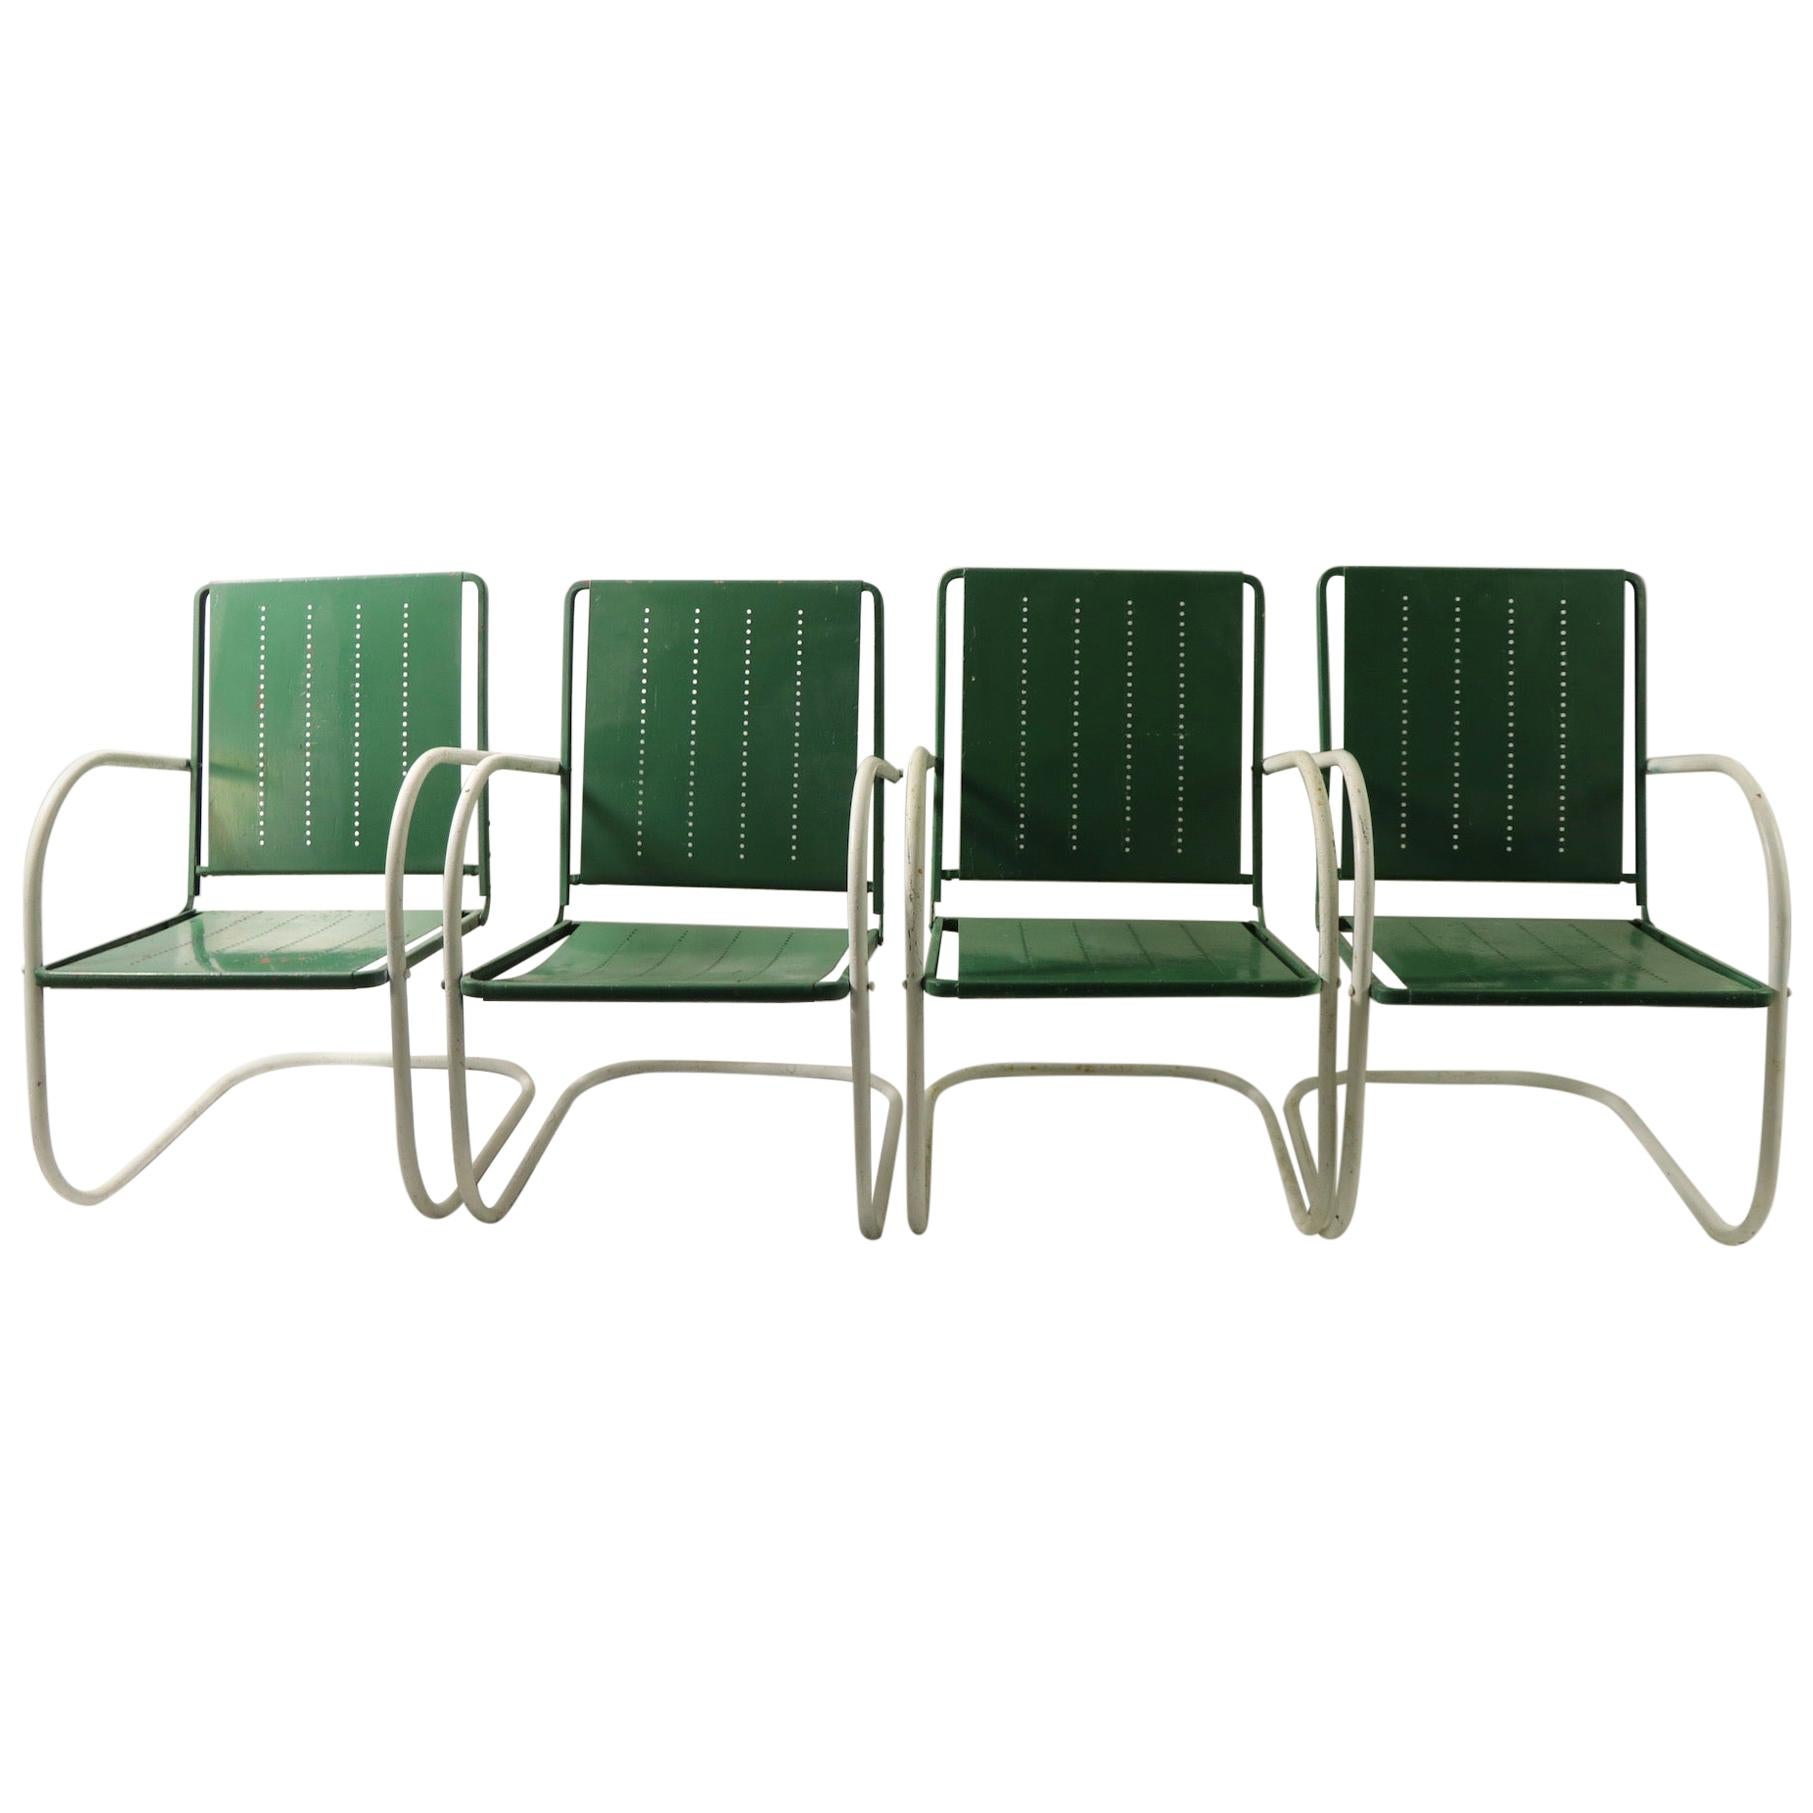 Set of 4 Art Deco Patio Garden Lawn Chairs